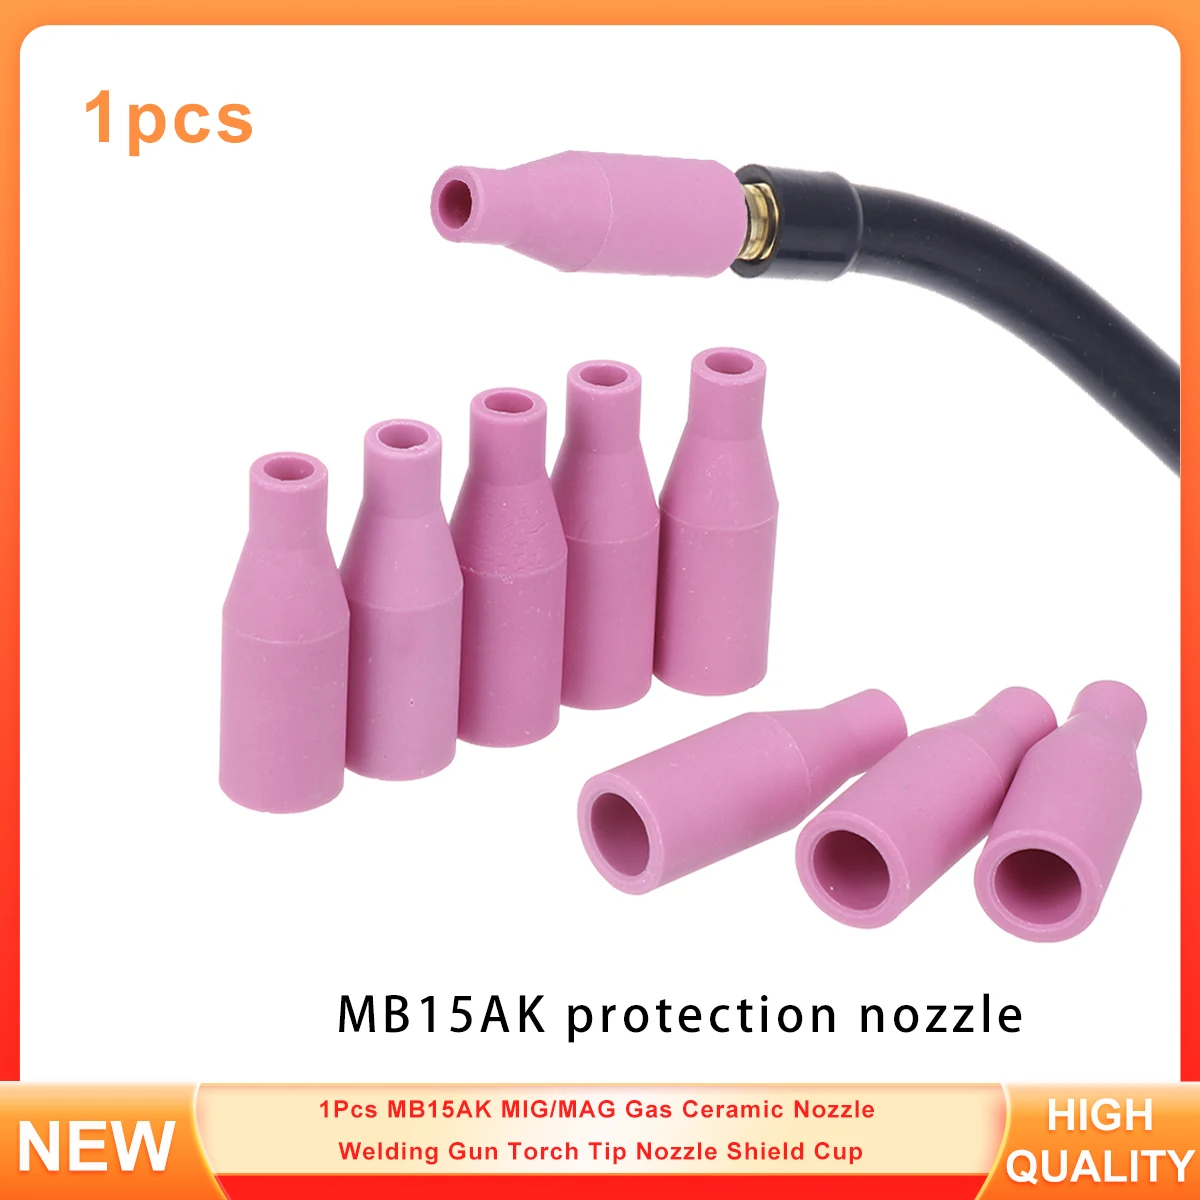 1Pcs MB15AK MIG/MAG Gas Ceramic Nozzle Welding Gun Torch Tip Nozzle Shield Cup